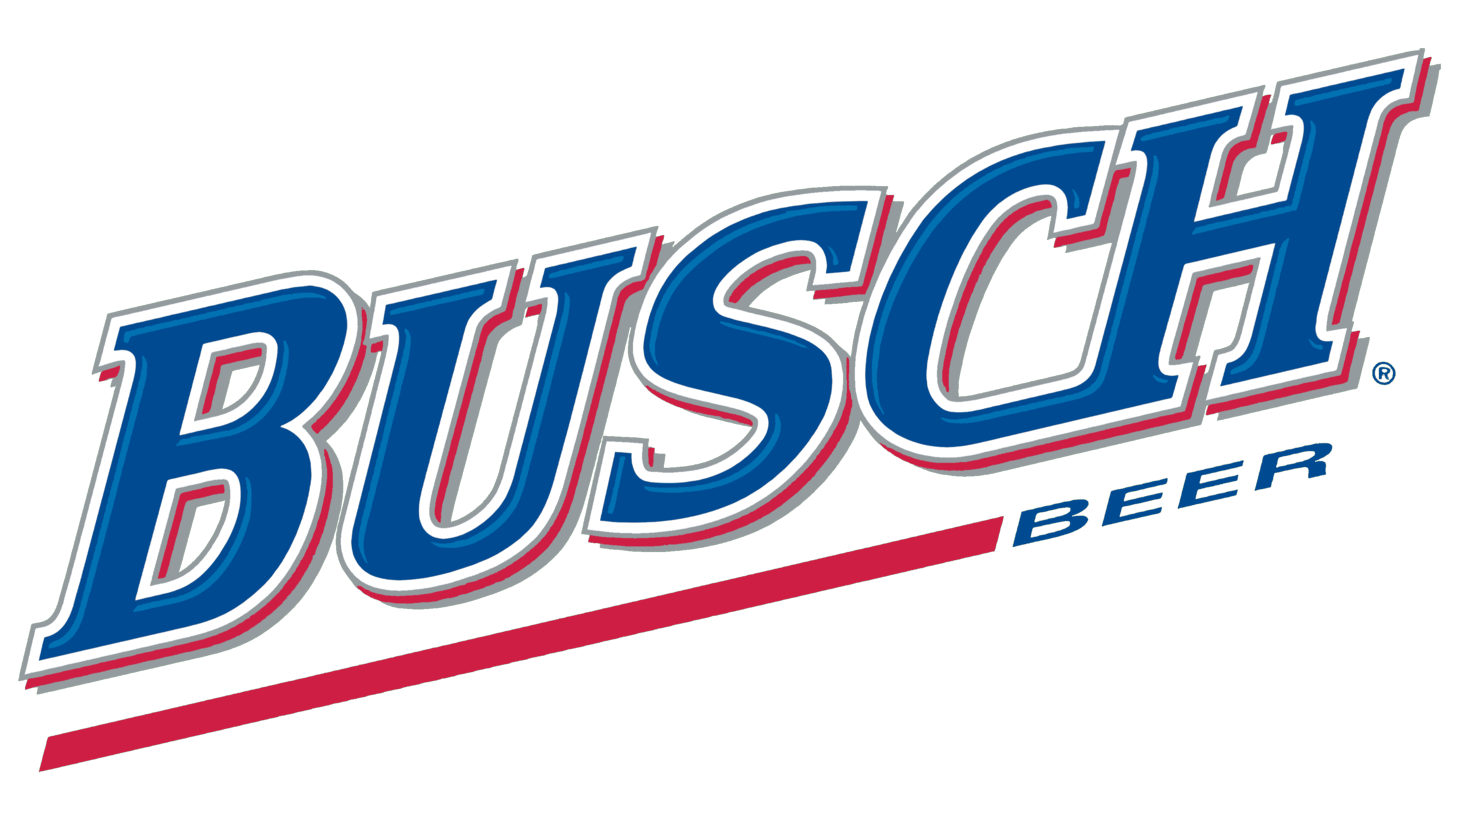 Busch sign 1955